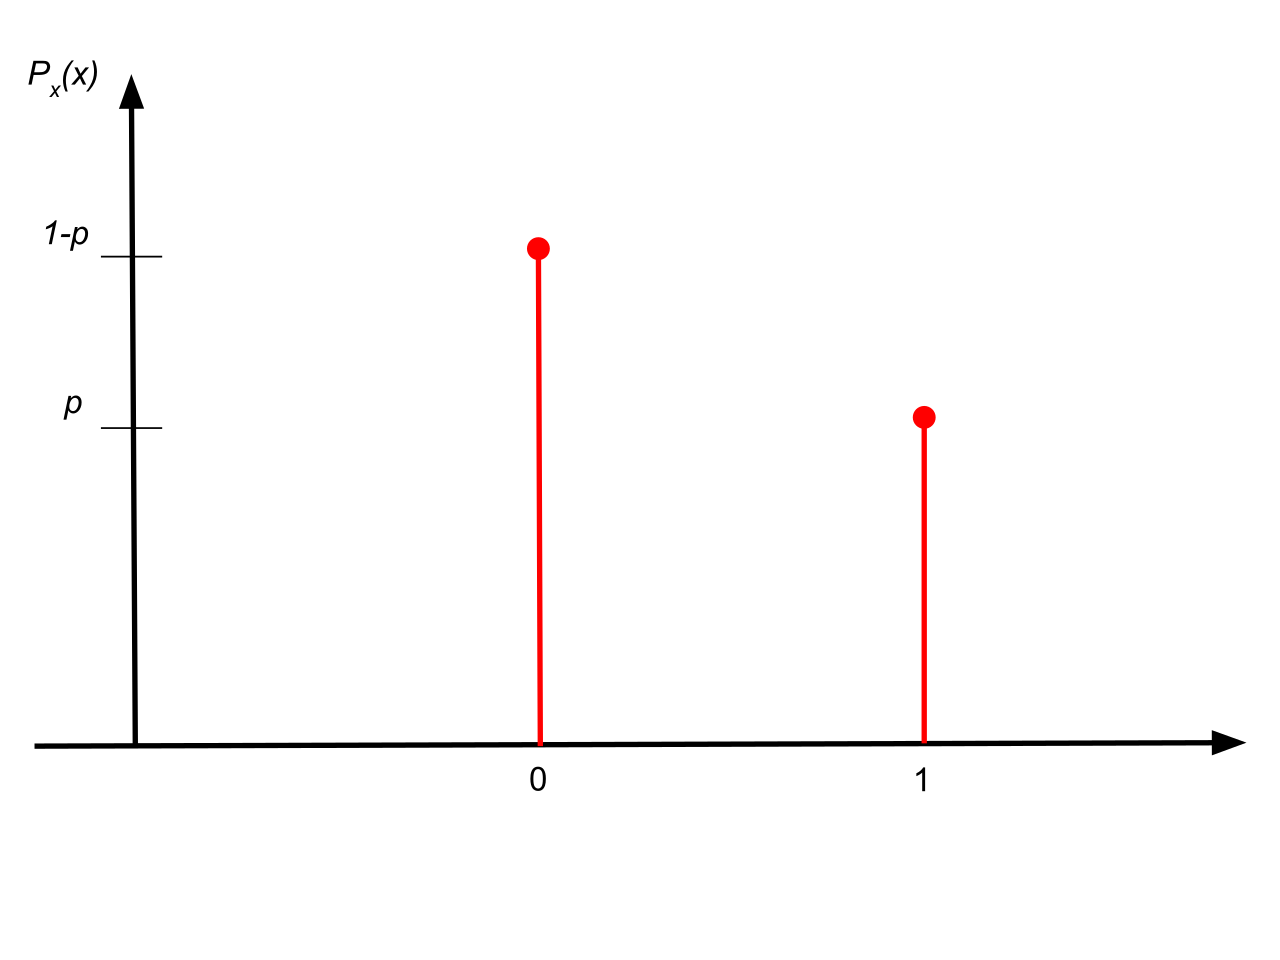 Bernoulli Distribution example